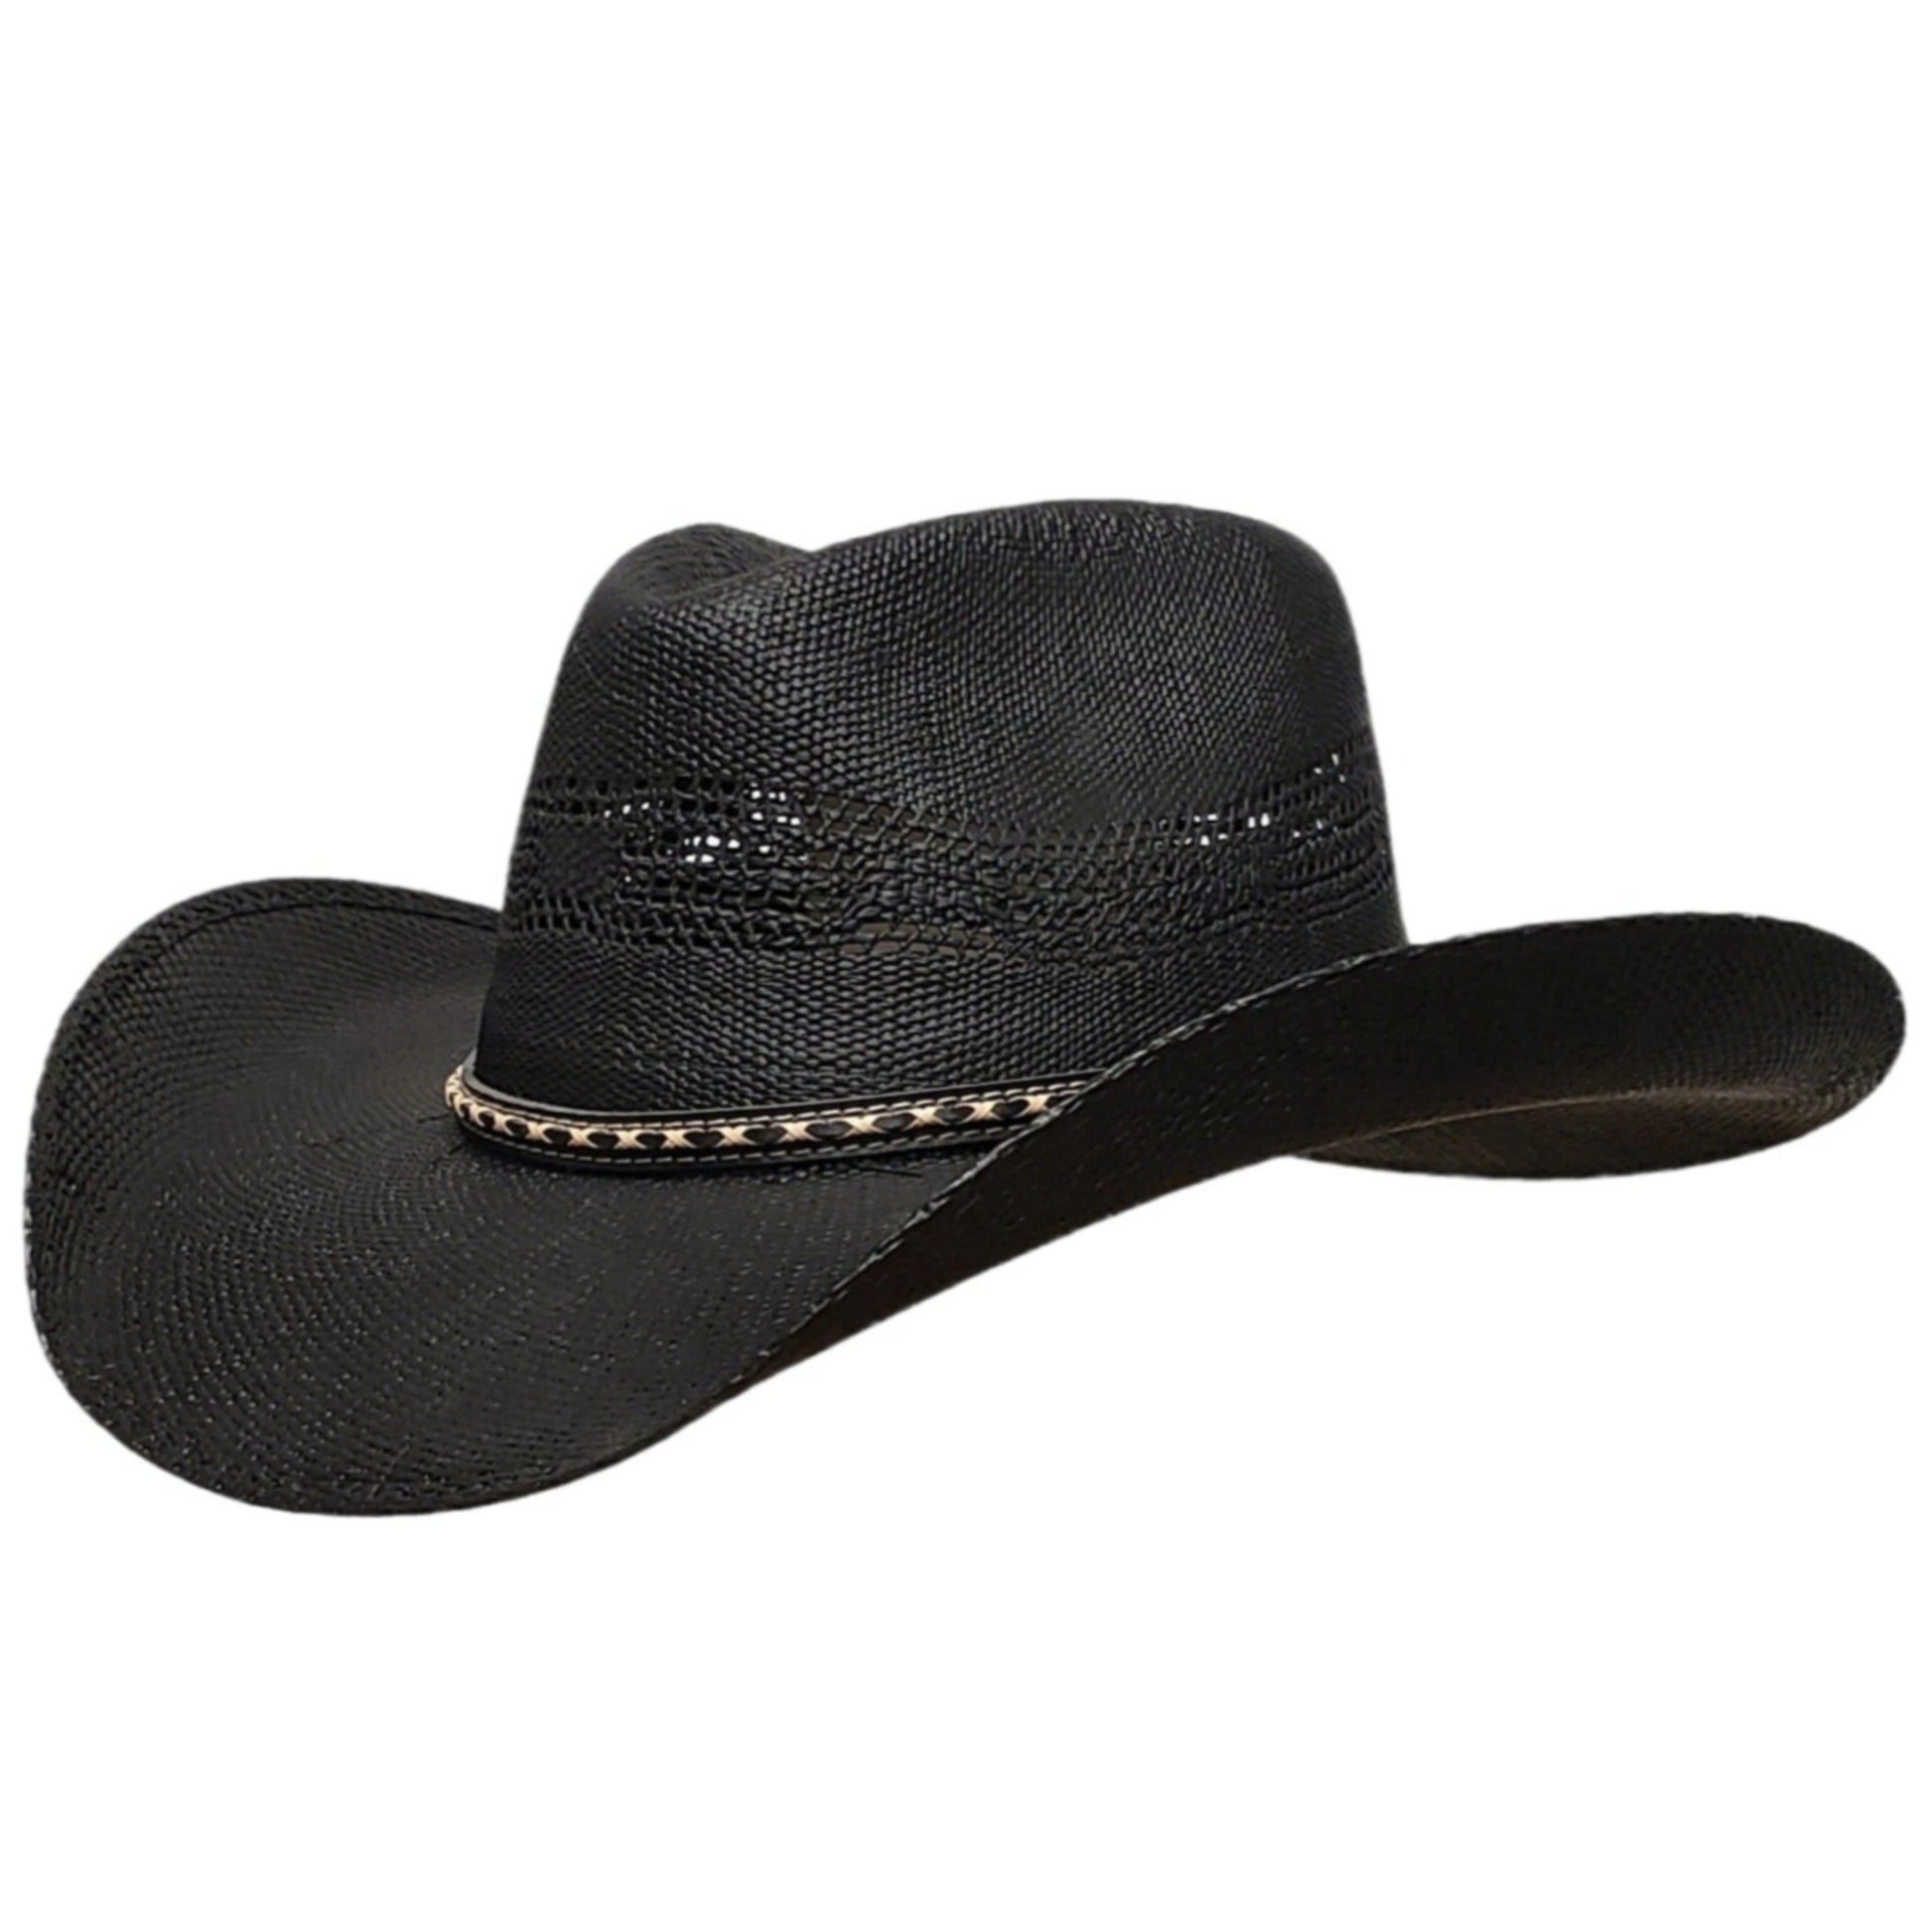 Sambora Black Straw Western Hat Extra Large Fits 7-5/8 to 7-3/4